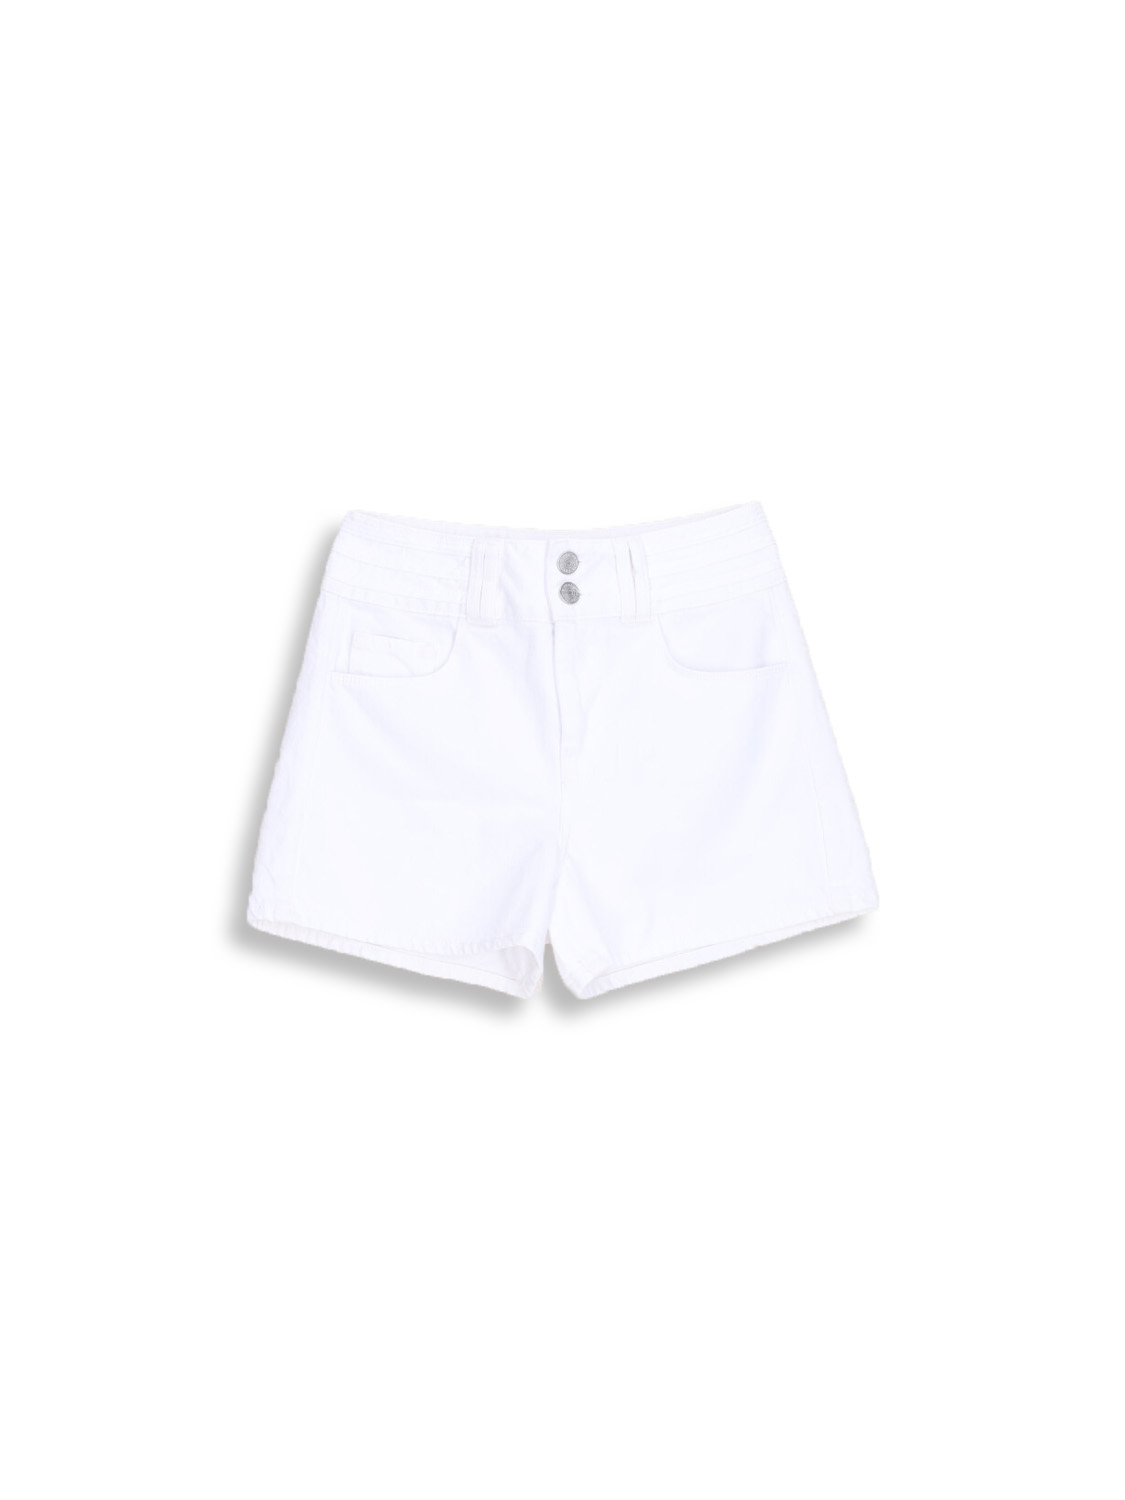 Triple Binding Short - High-waist cotton shorts